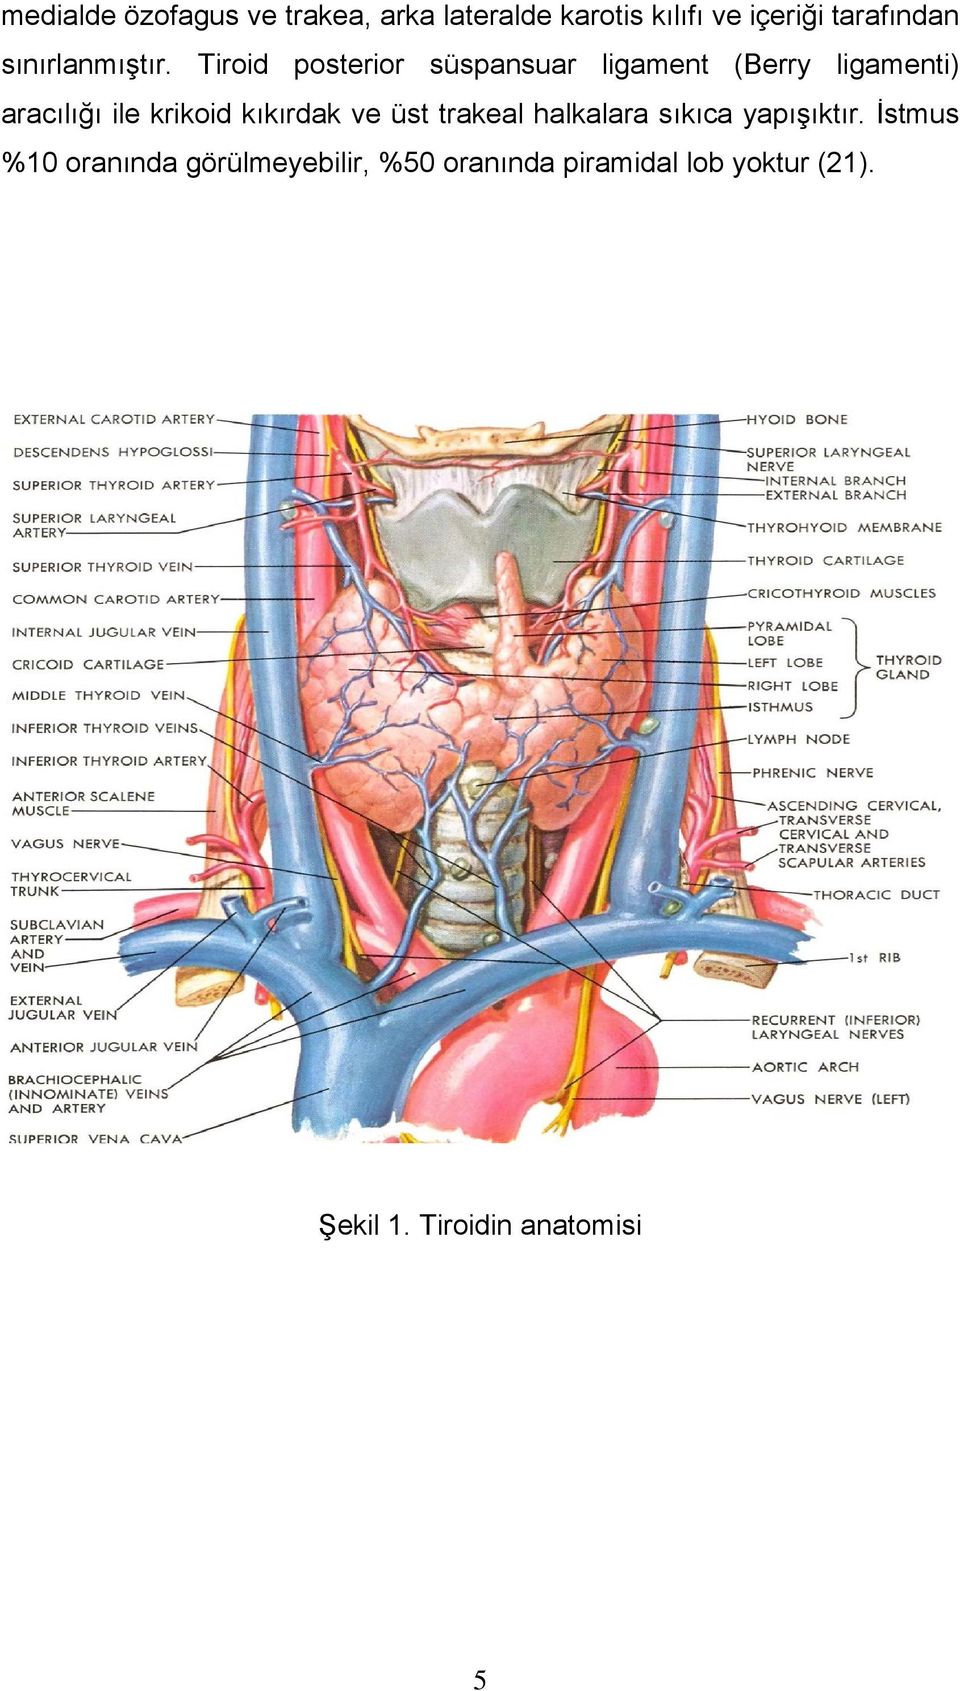 Tiroid posterior süspansuar ligament (Berry ligamenti) aracılığı ile krikoid